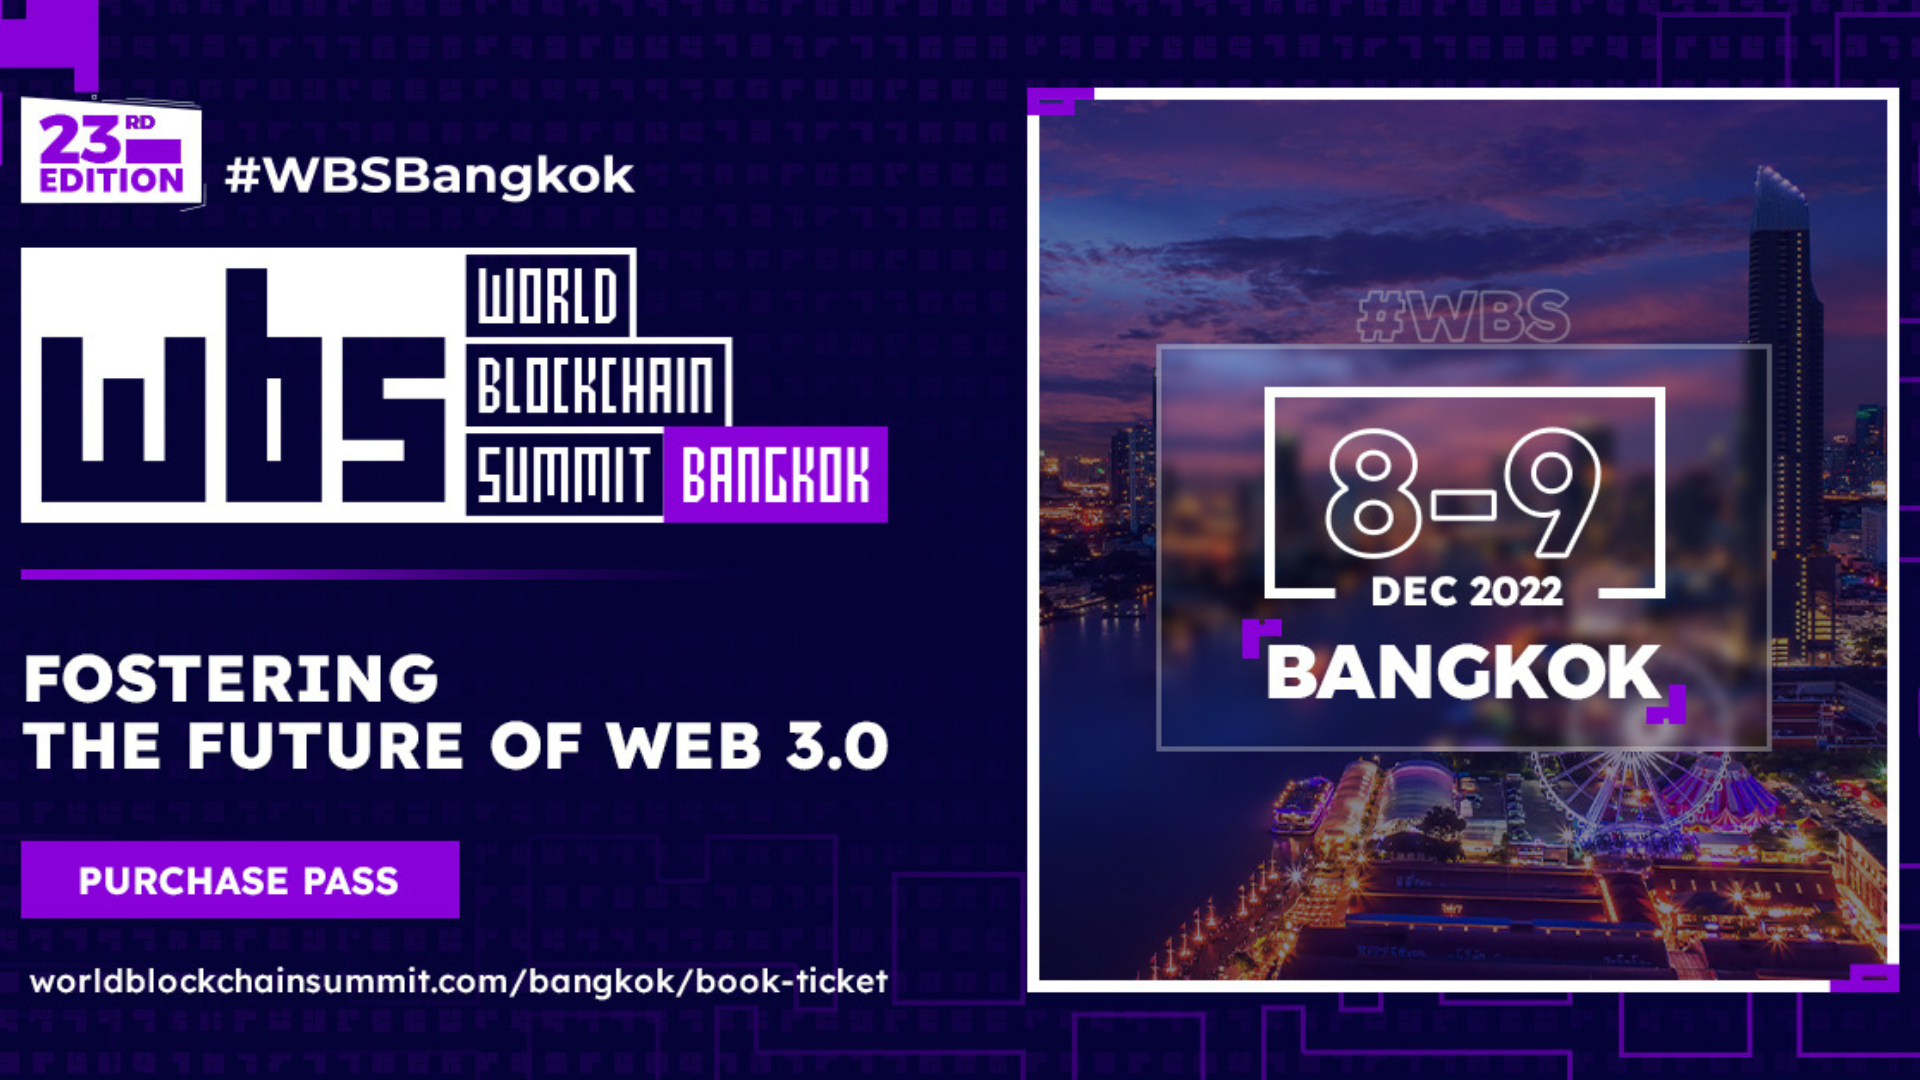 World Blockchain Summit Bangkok 2022 Siap Digelar Desember Mendatang.